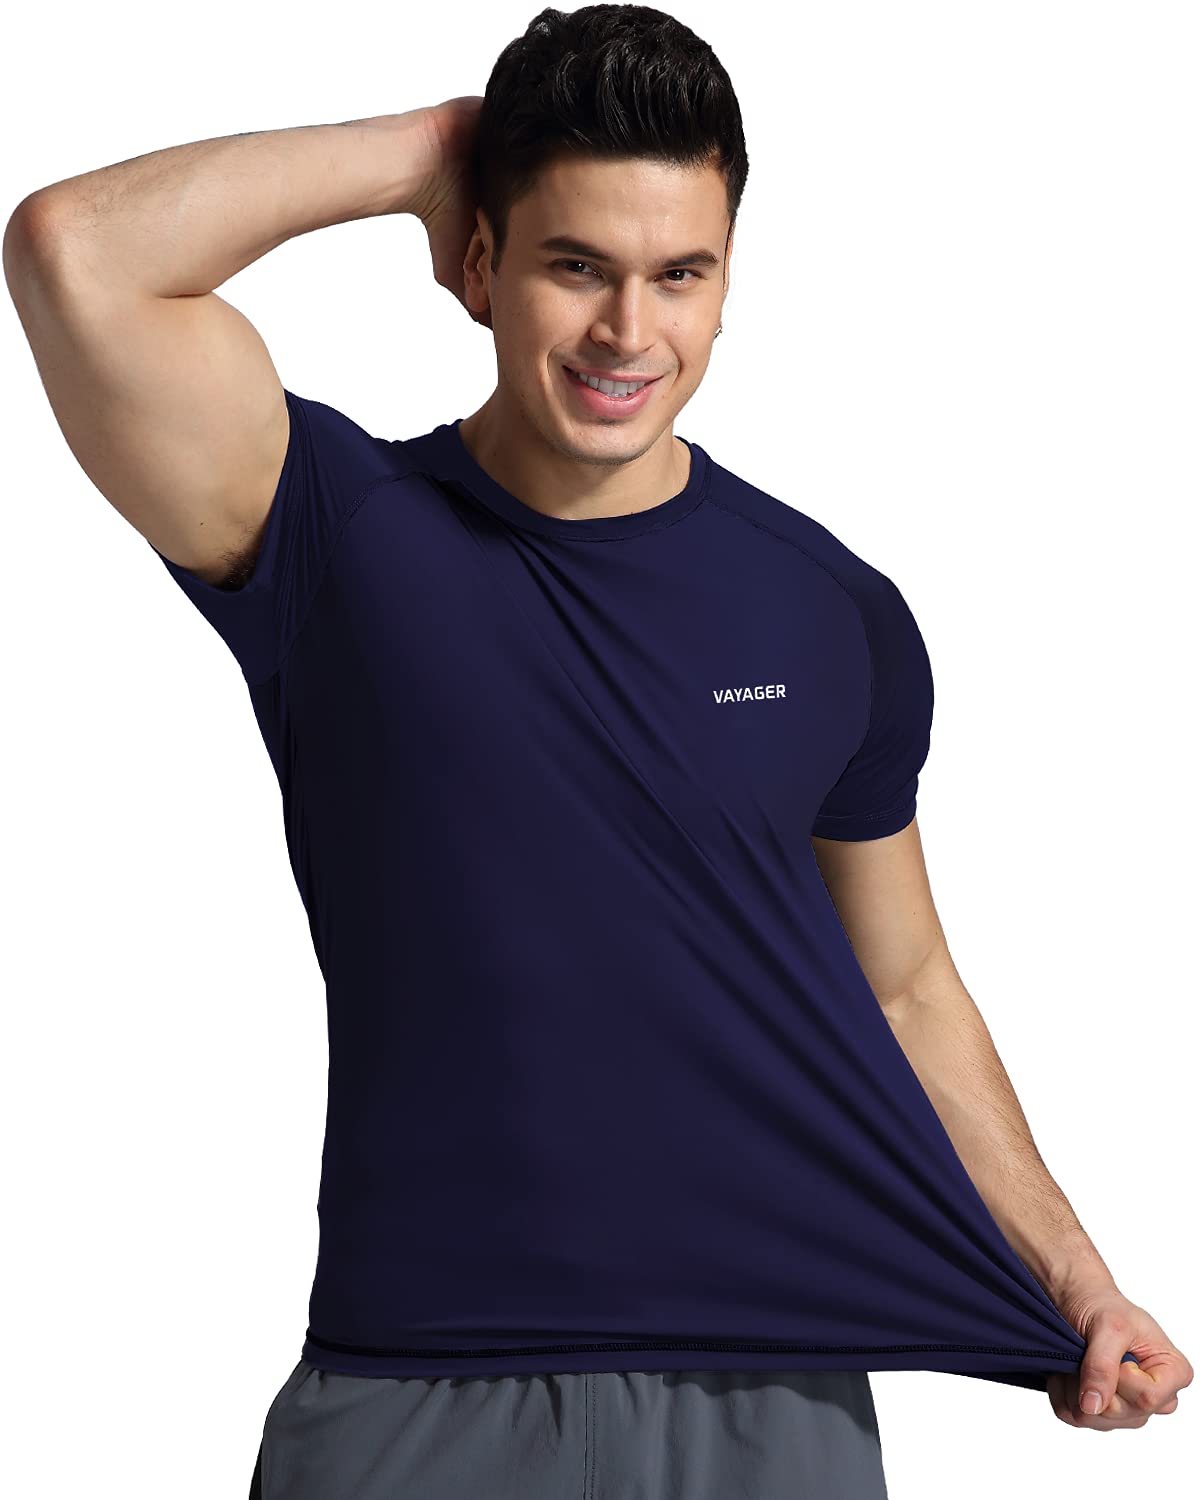 VAYAGER Men's Swim Shirts Rash Guard UPF 50+ T Shirts Quick Dry Loose Fit Water Surfing Shirt(Navy-L) - Opticdeals